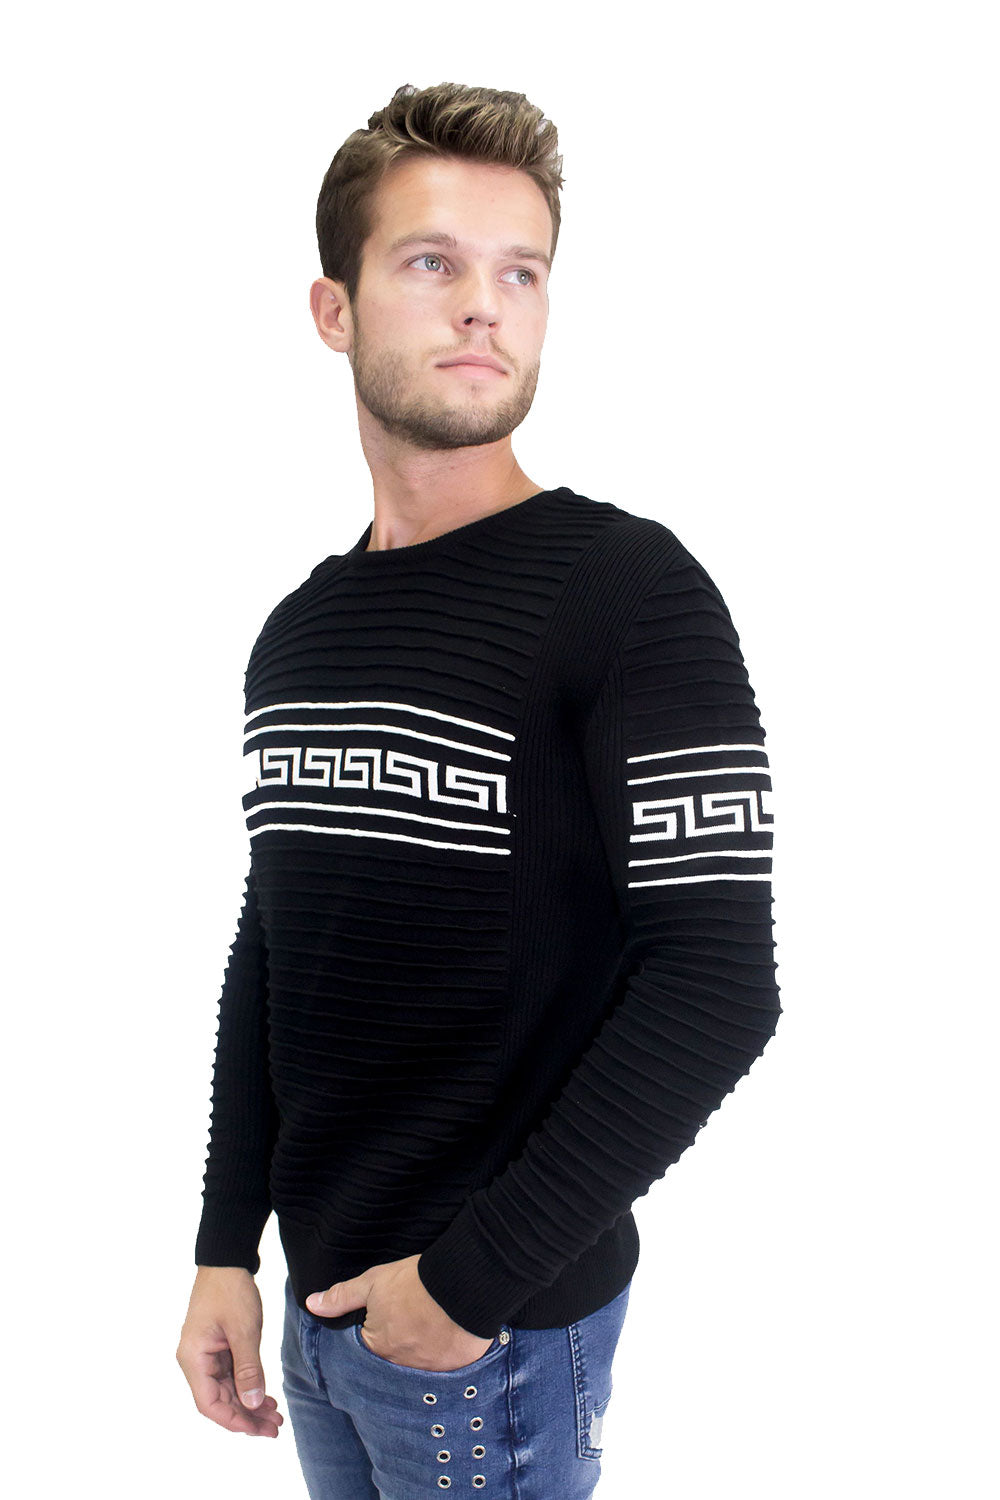 Barabas Men's Solid Color Greek Pattern Crew Neck Sweaters LS226 Black